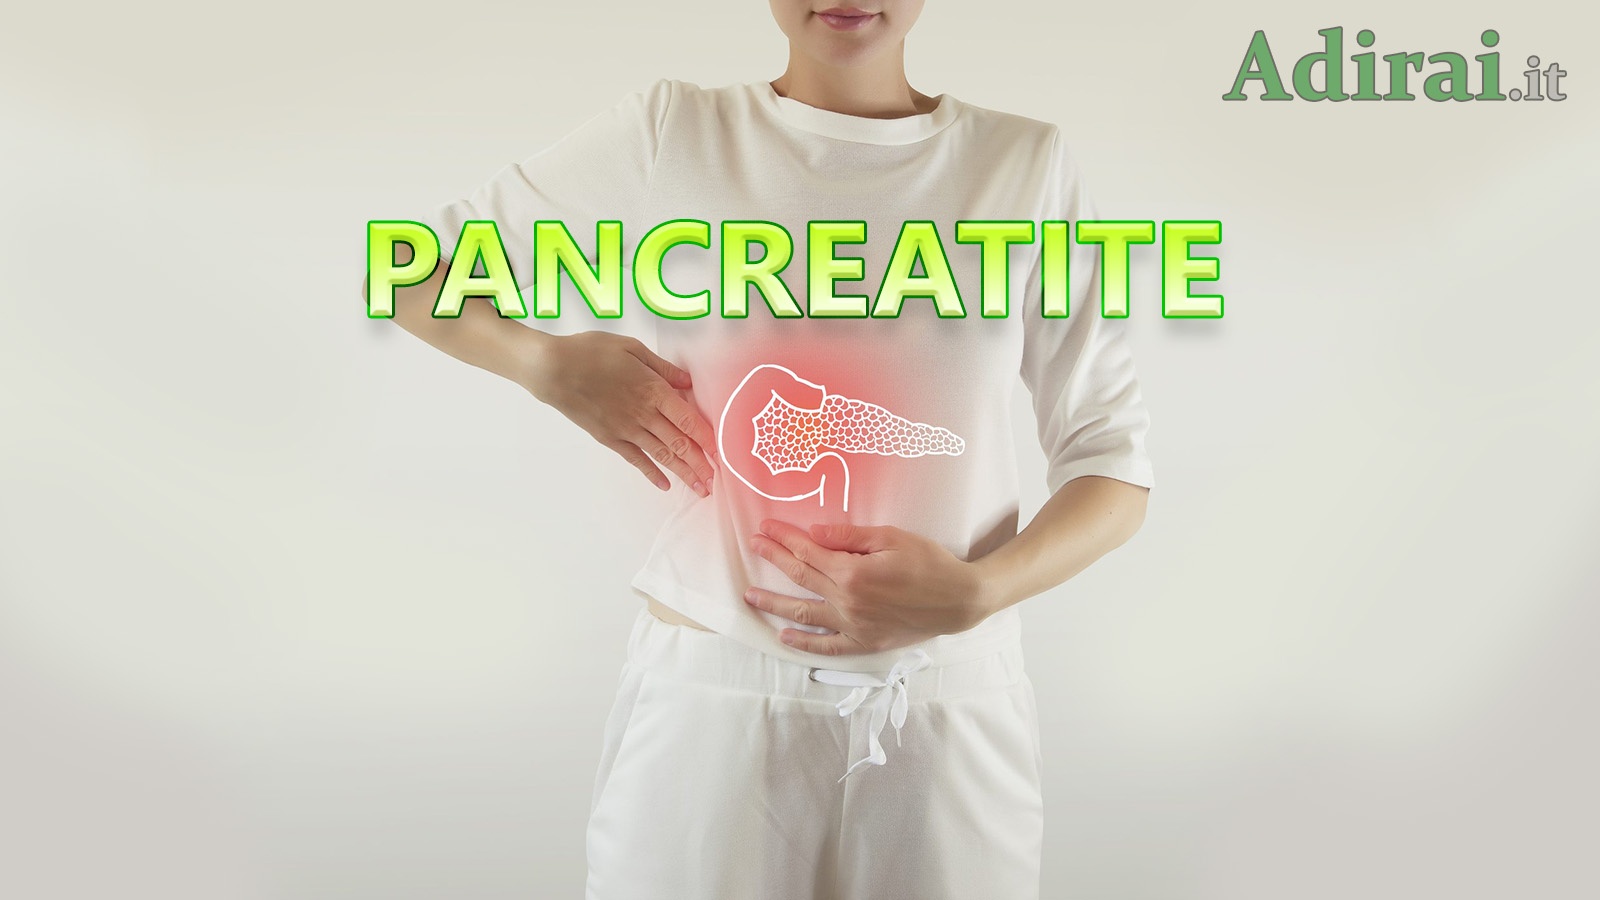 Pancreatite acuta e cronica: Sintomi, cause e dieta